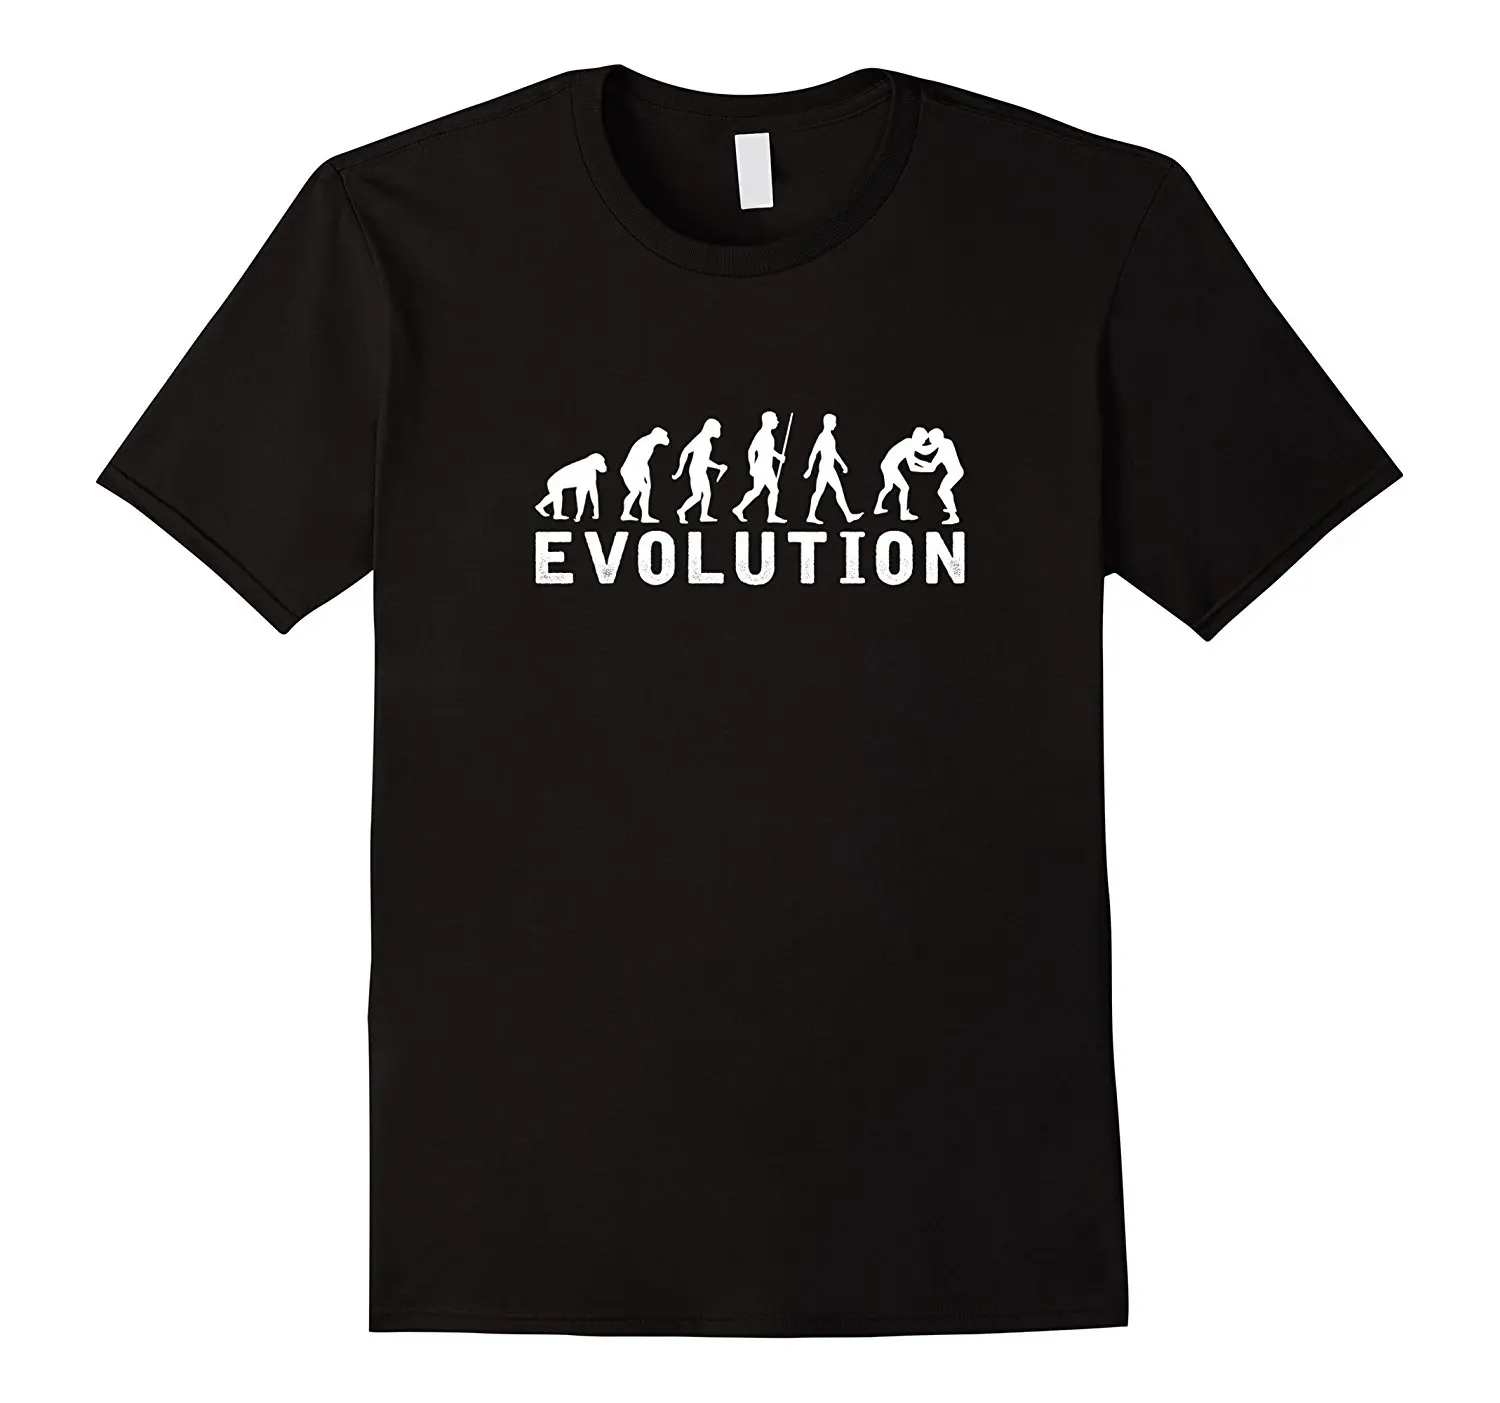 

Wrestling Evolution T-Shirt Tee Shirts Hipster O-Neck Design T Shirts Casual Cool Harajuku Funny Rick Tee Shirts Tops